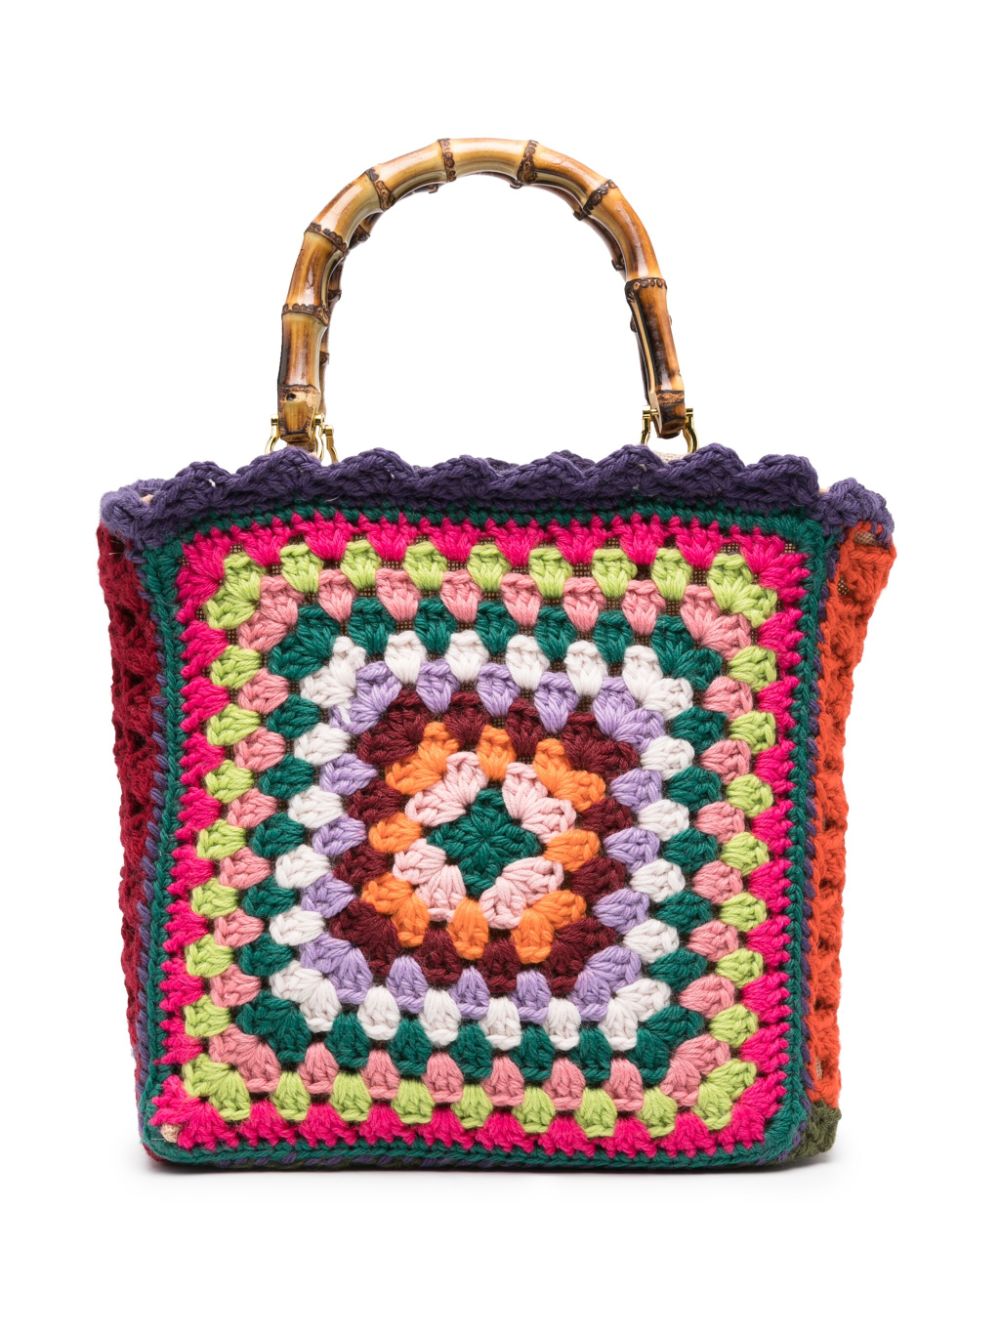 La Milanesa LA MILANESA- Medium Crochet Handbag